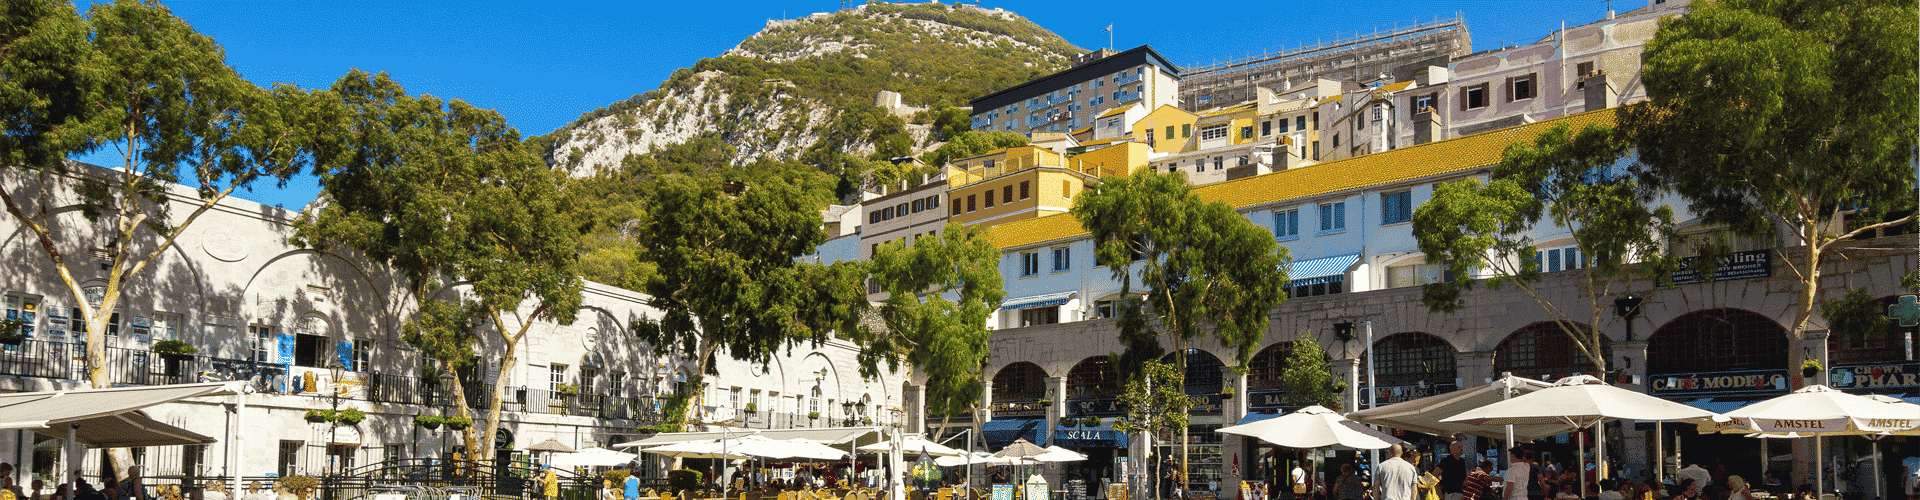 Essential Free Tour Gibraltar Banner